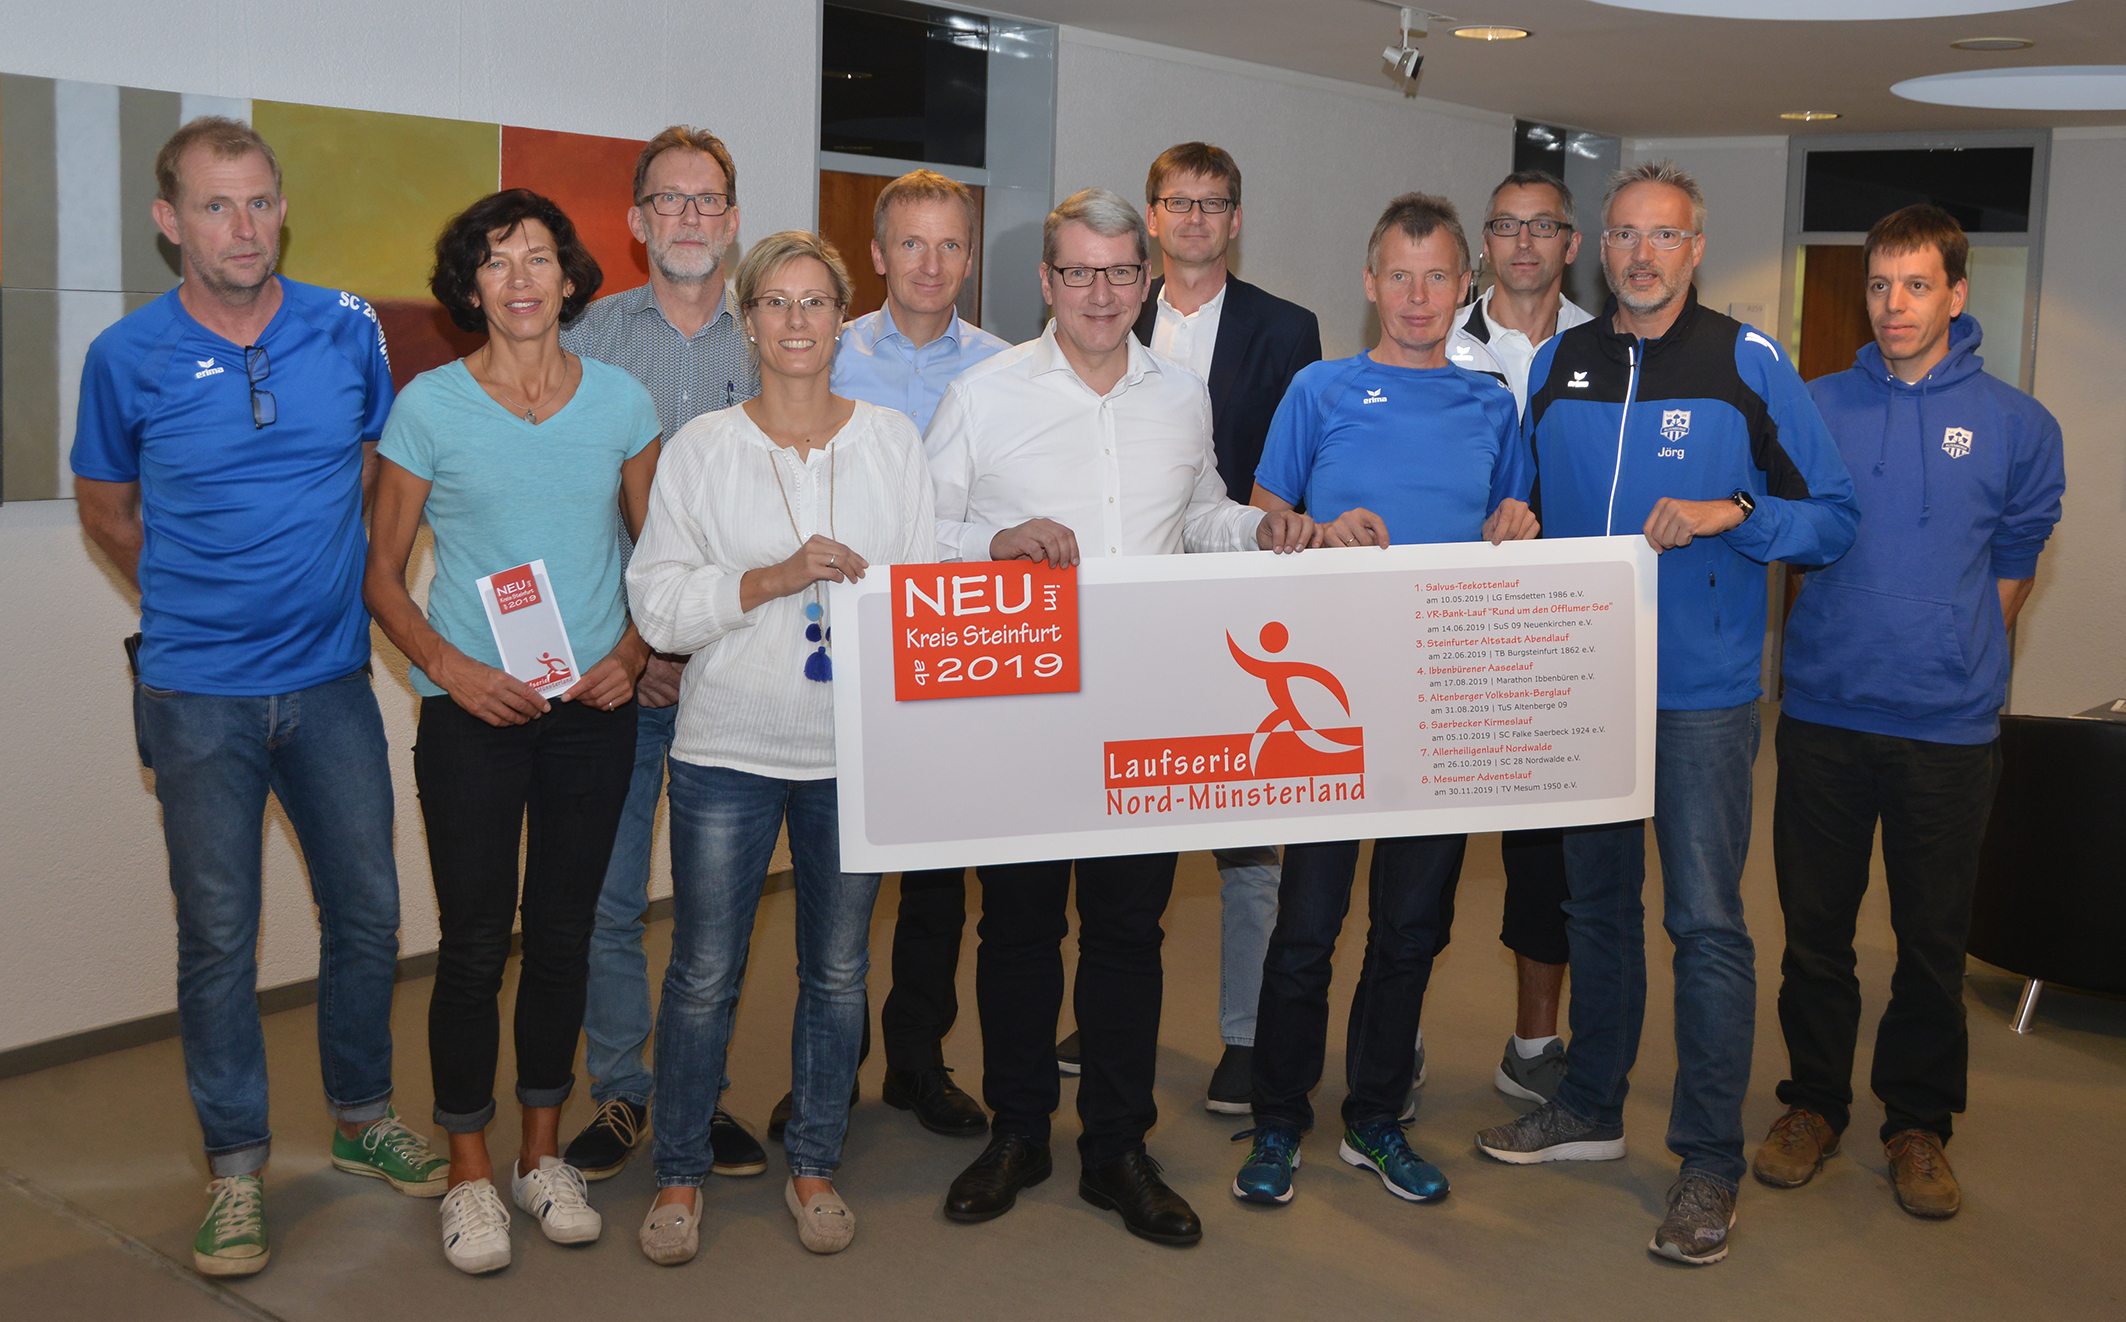 Laufserie Nord-Münsterland geht 2019 an den Start